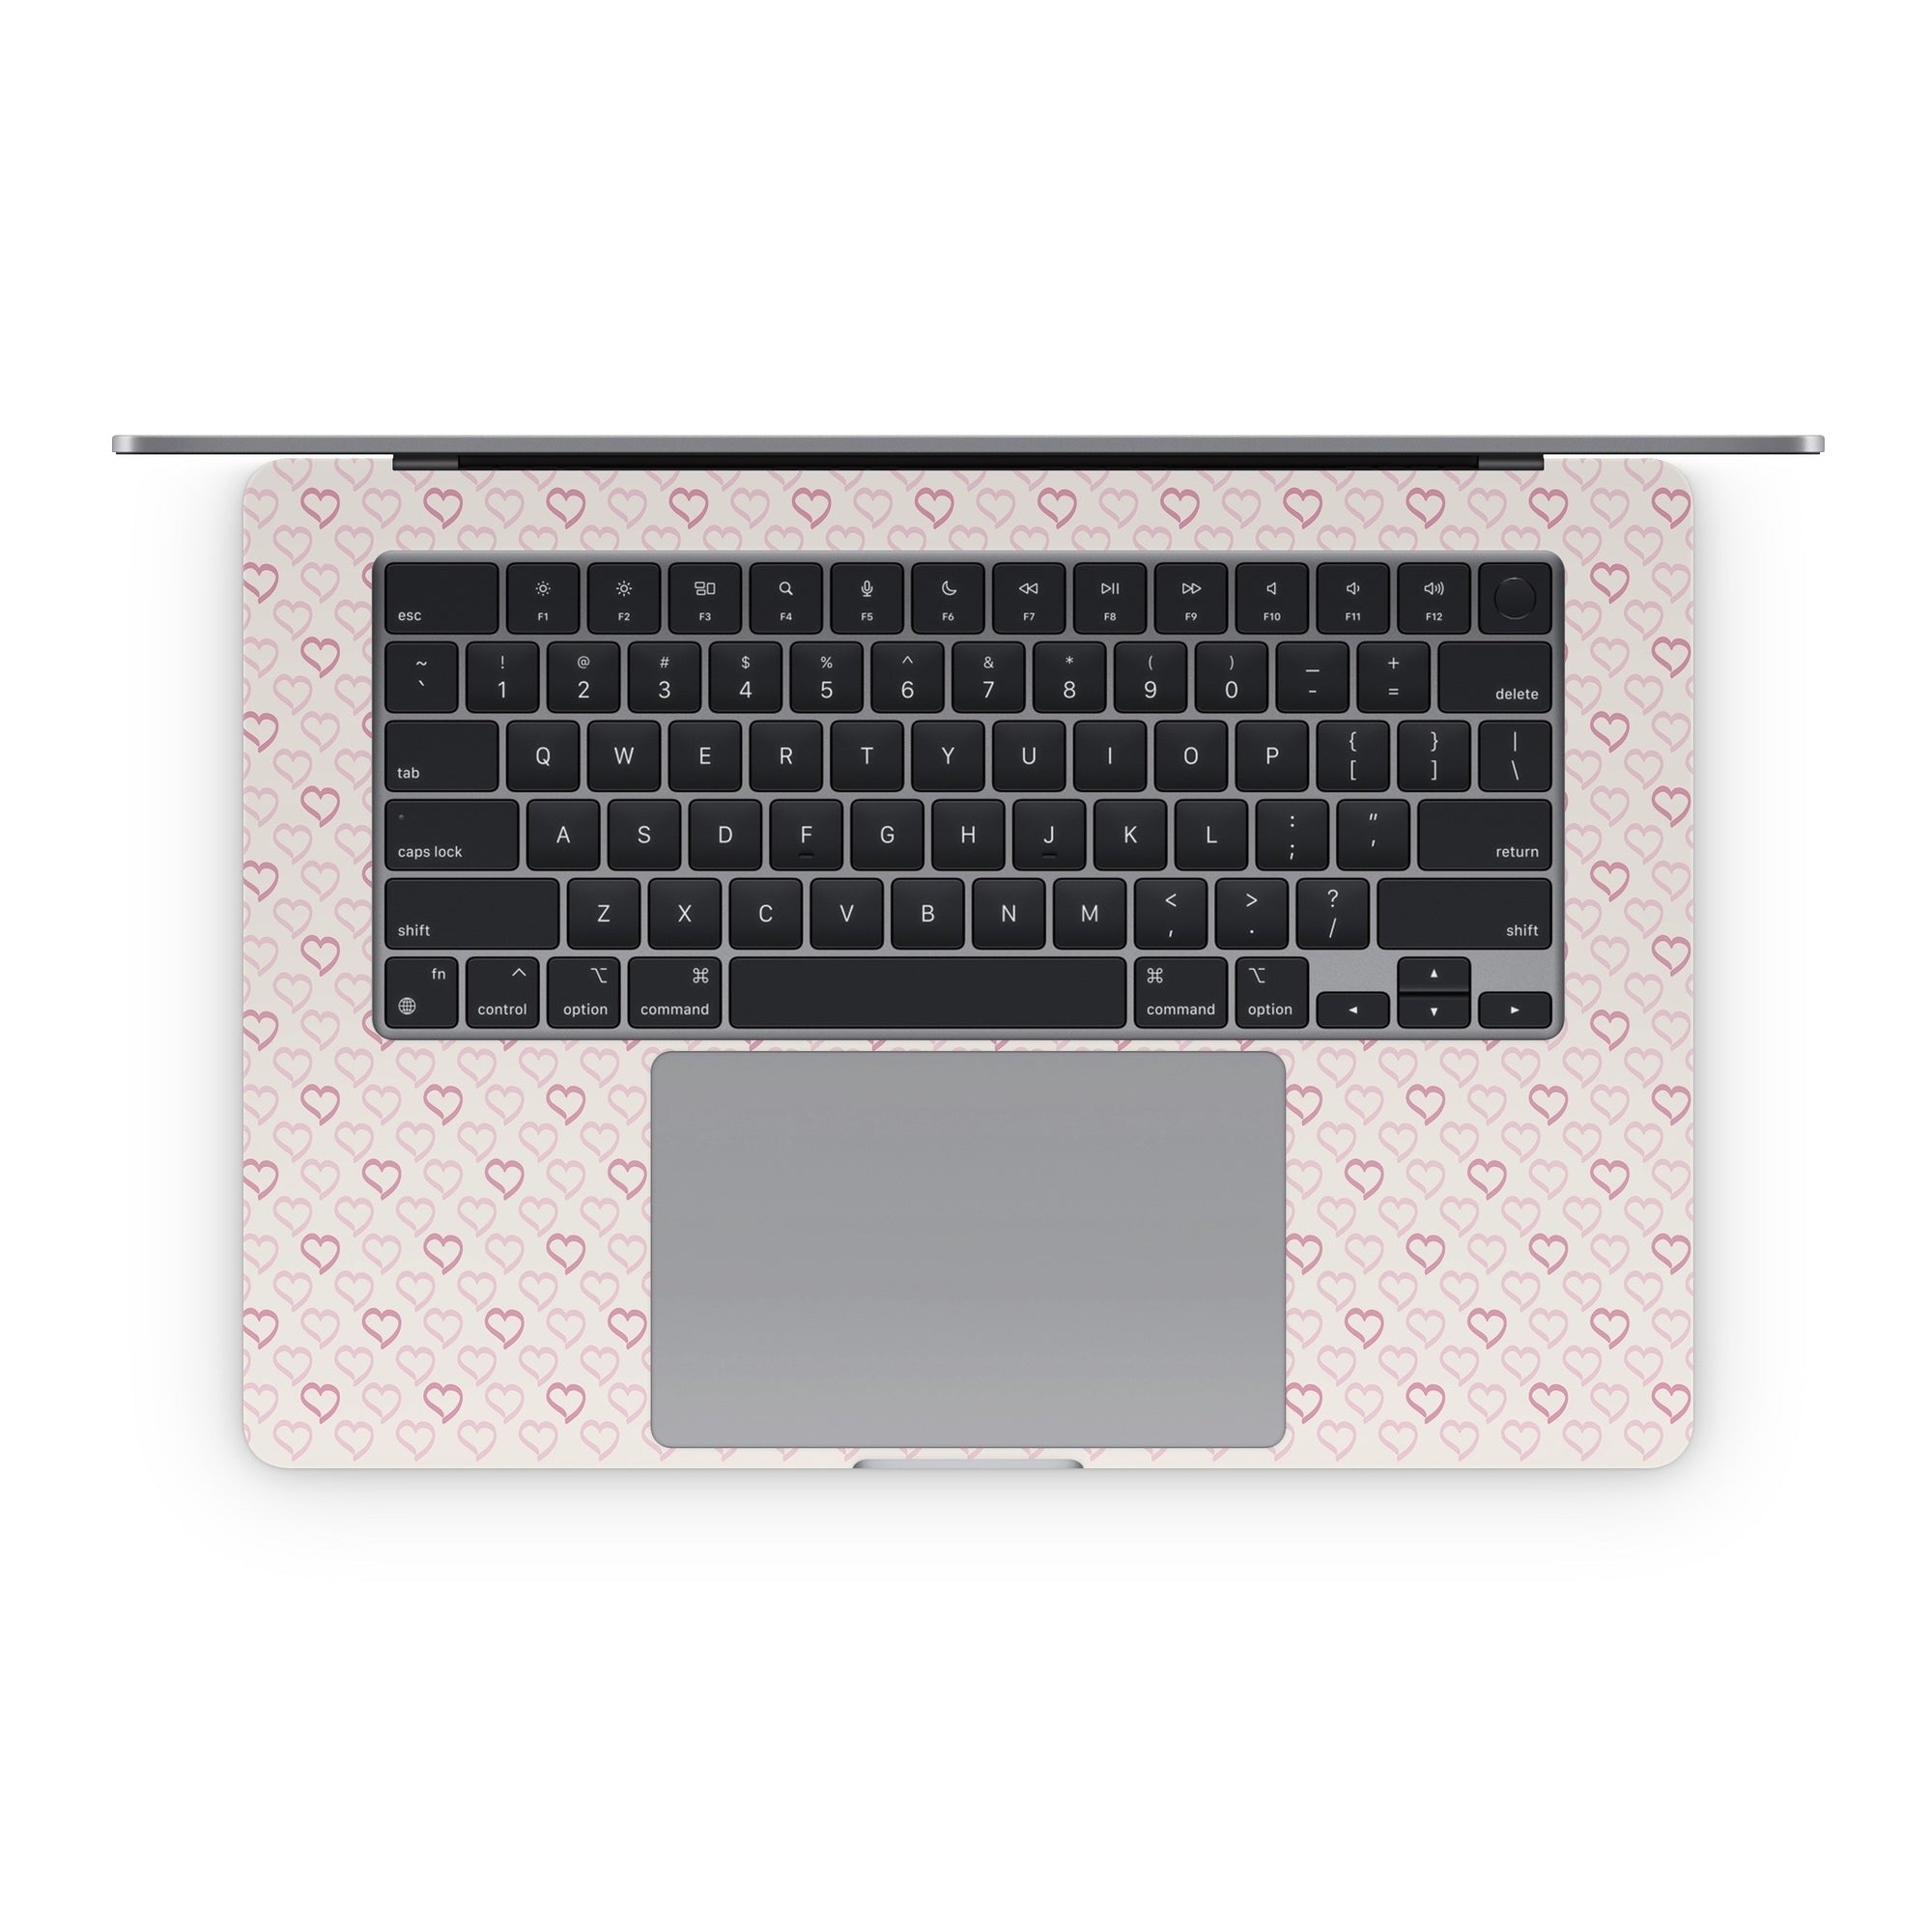 Patterned Hearts - Apple MacBook Skin